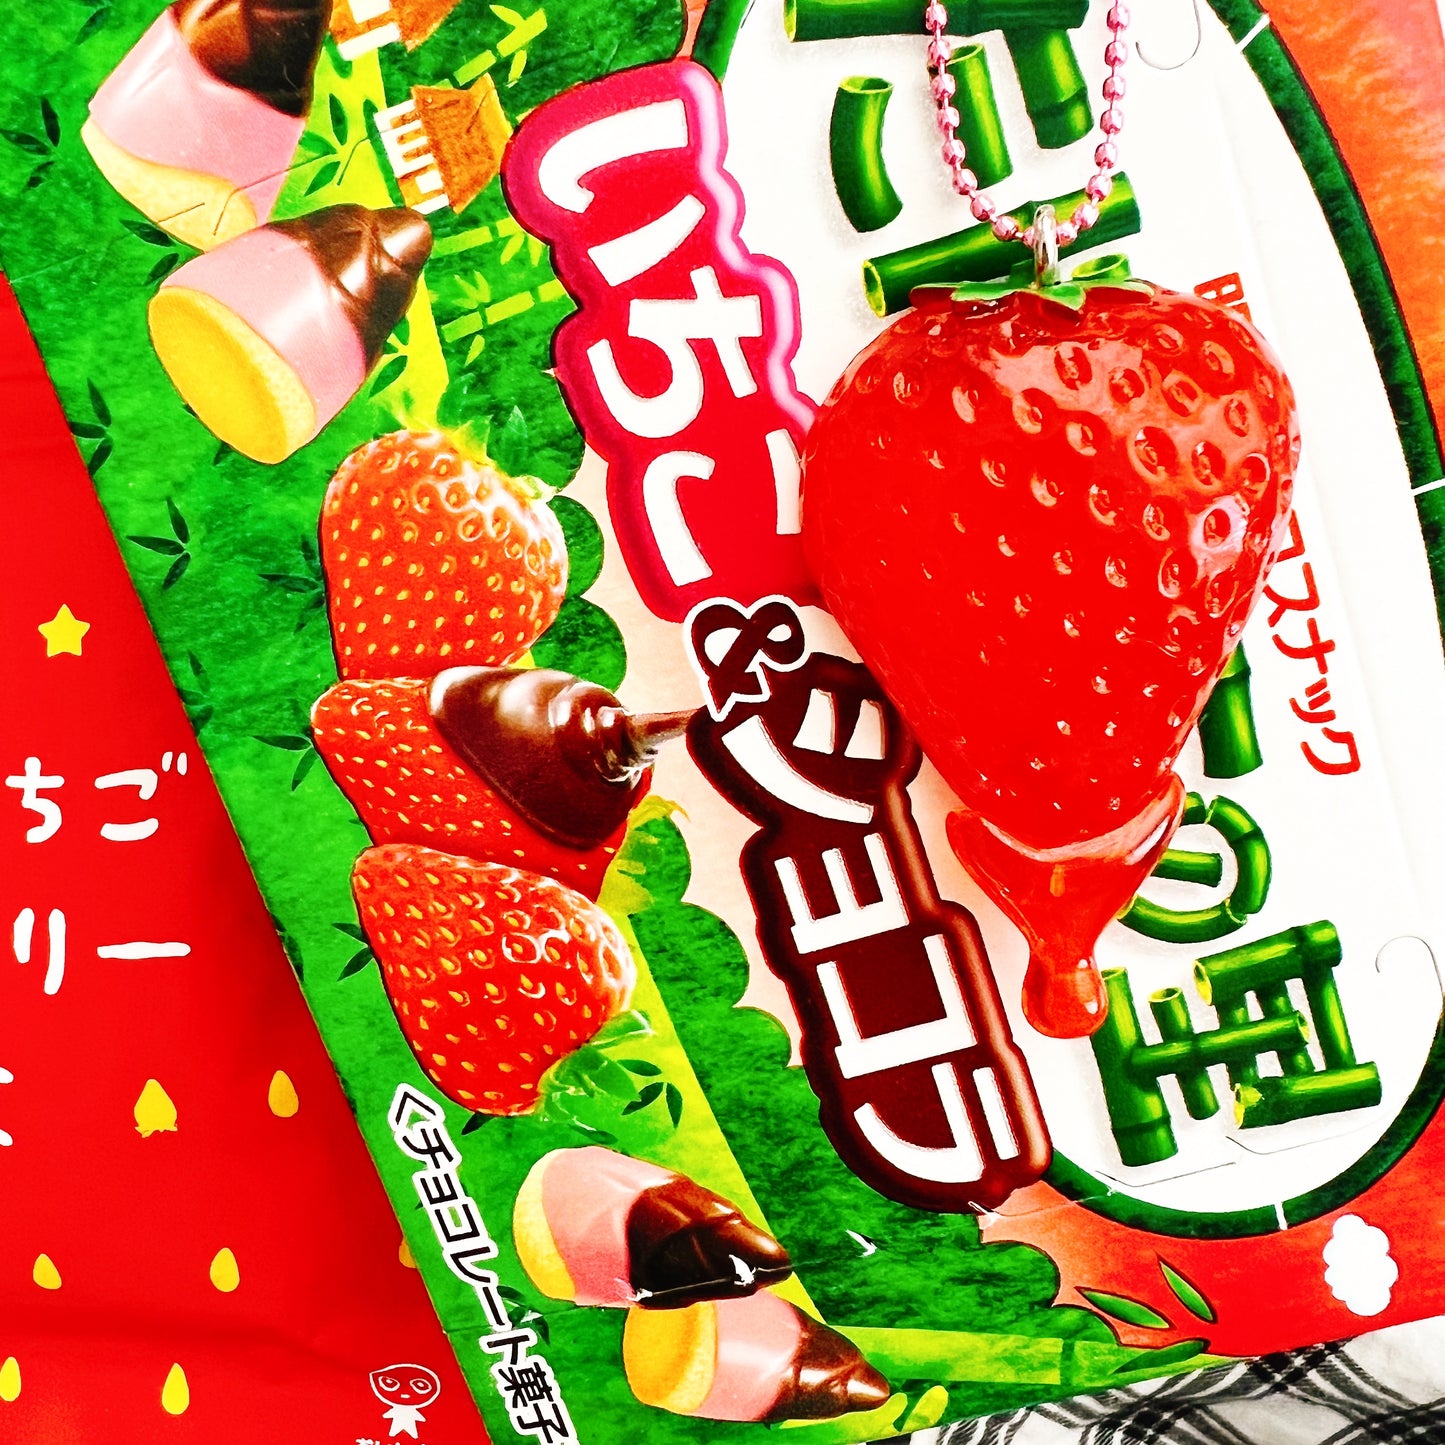 Sale!  DeLuxe Juicy Fruit Necklace - Strawberry